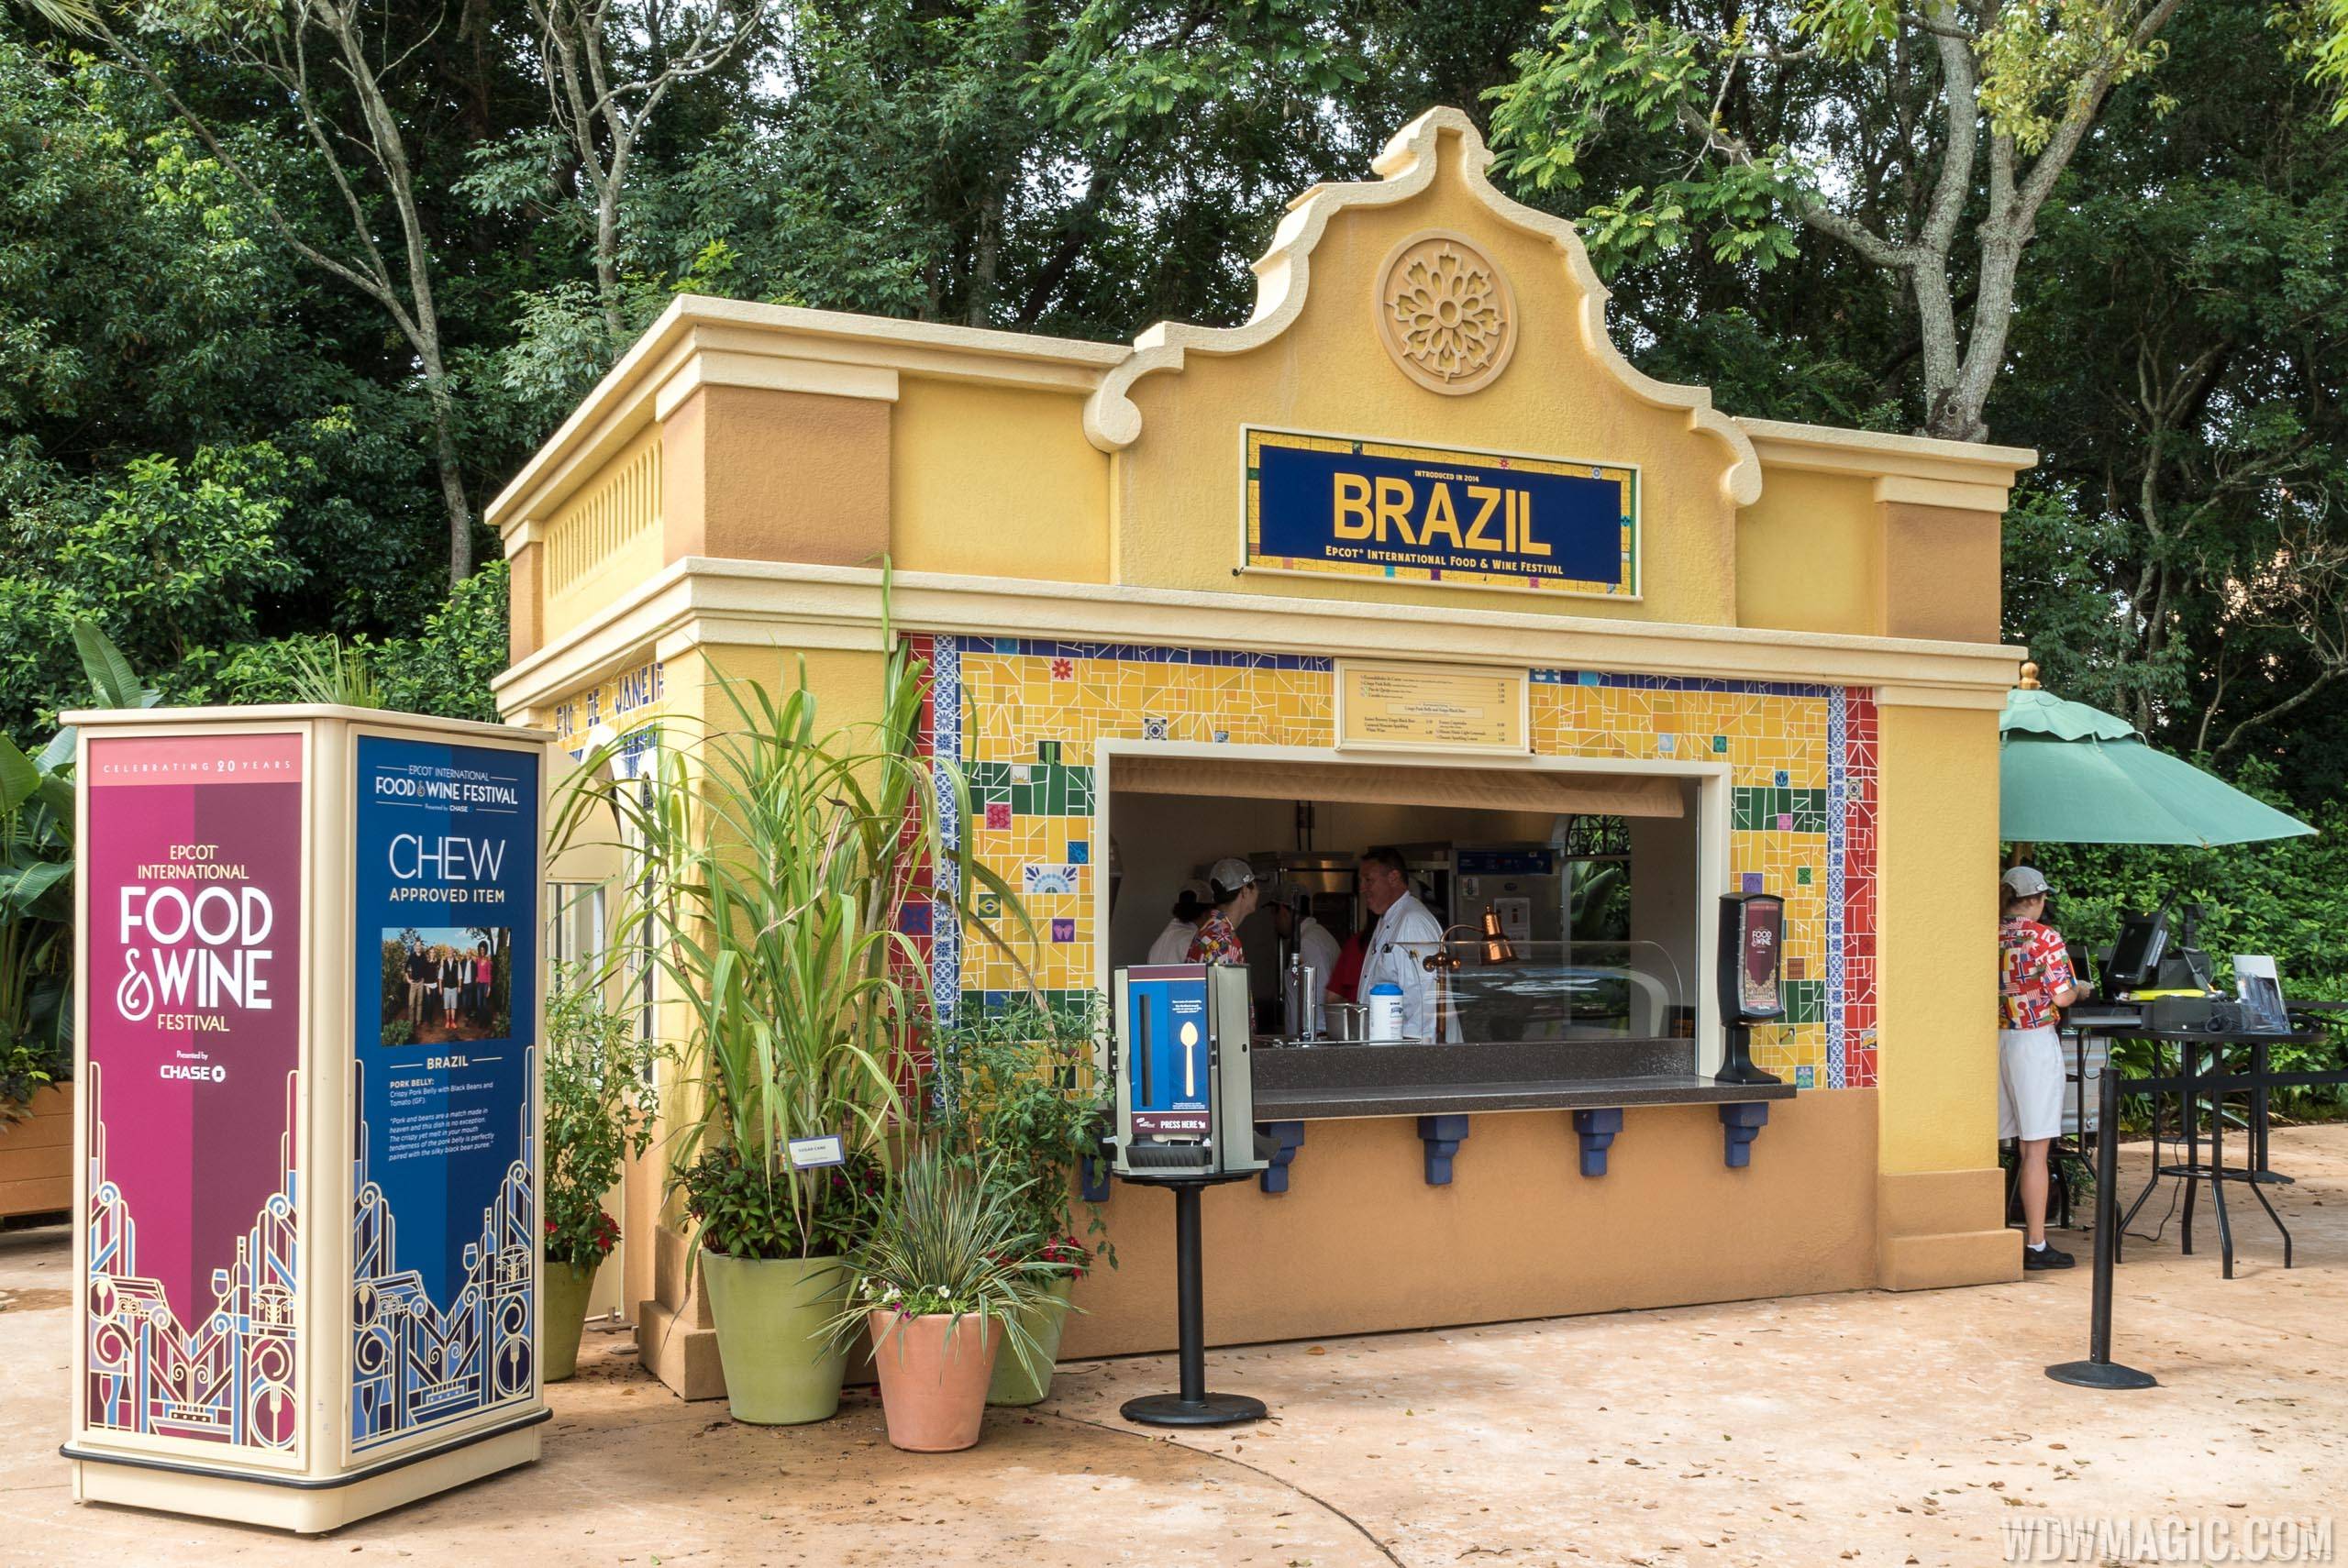 2015 Epcot Food and Wine Festival Marketplace kiosk - Brazil